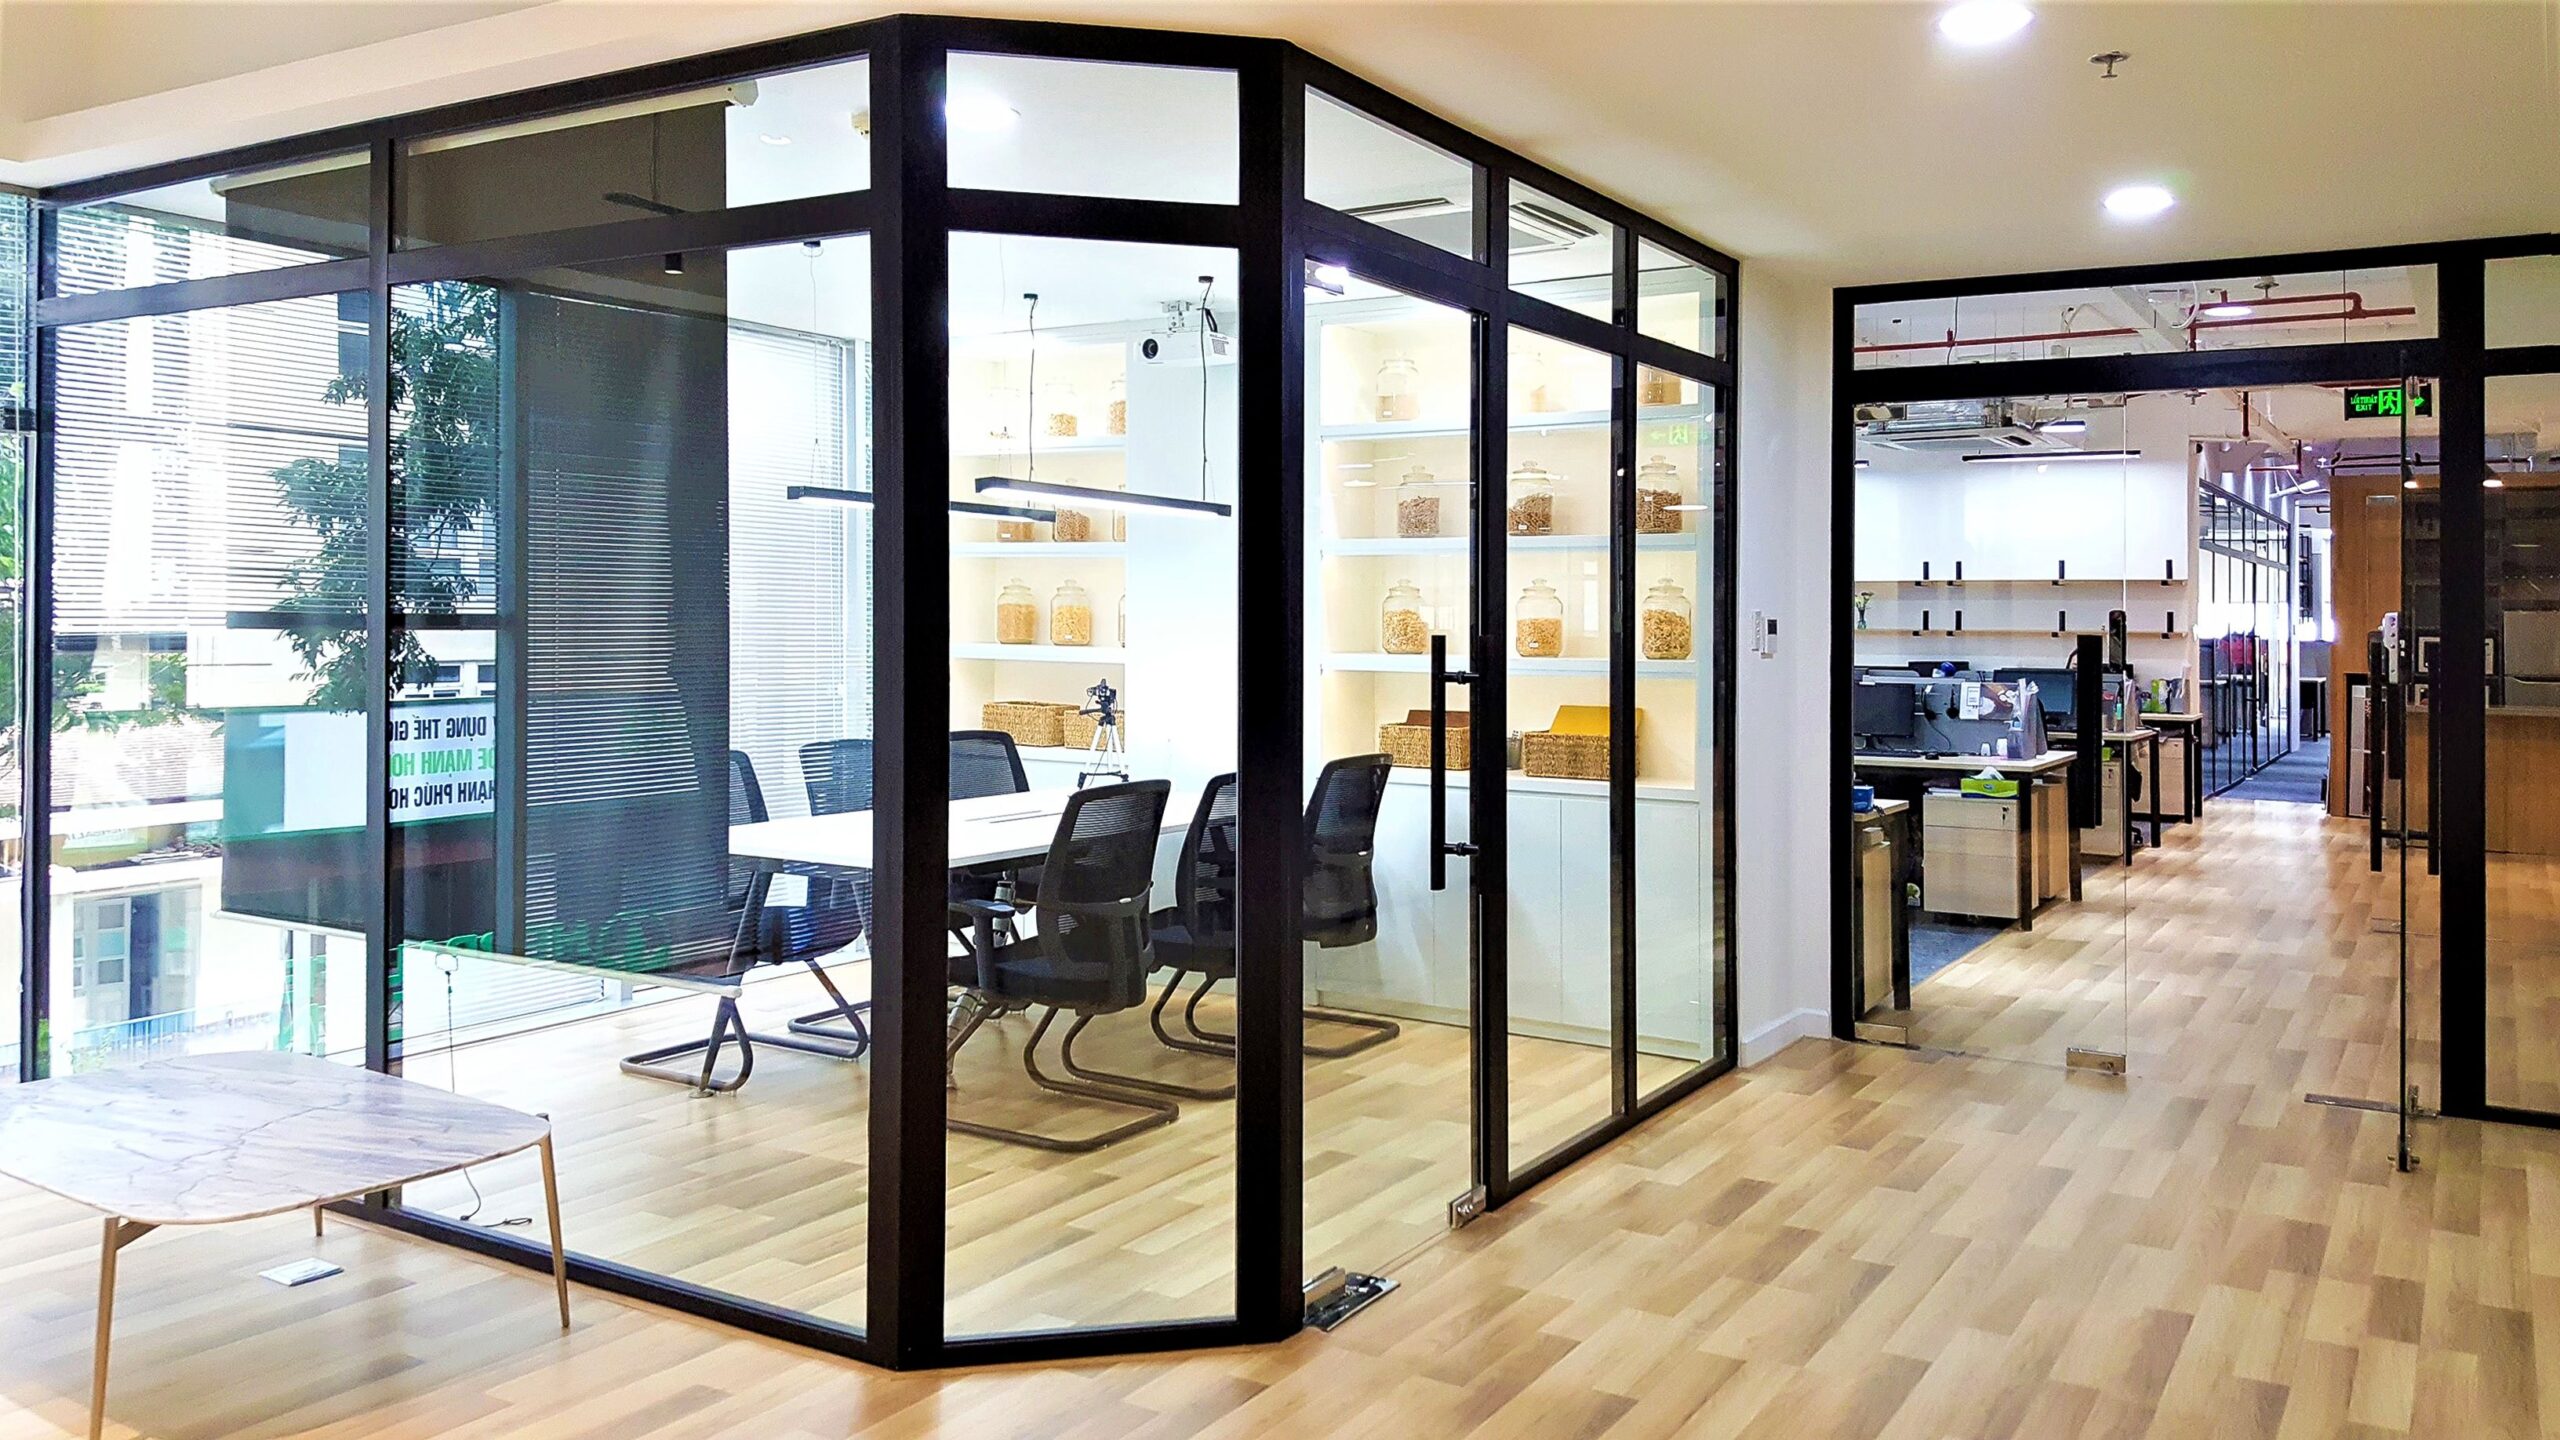 Meeting Room Actual Photo of Uniexport Office | NTDecor